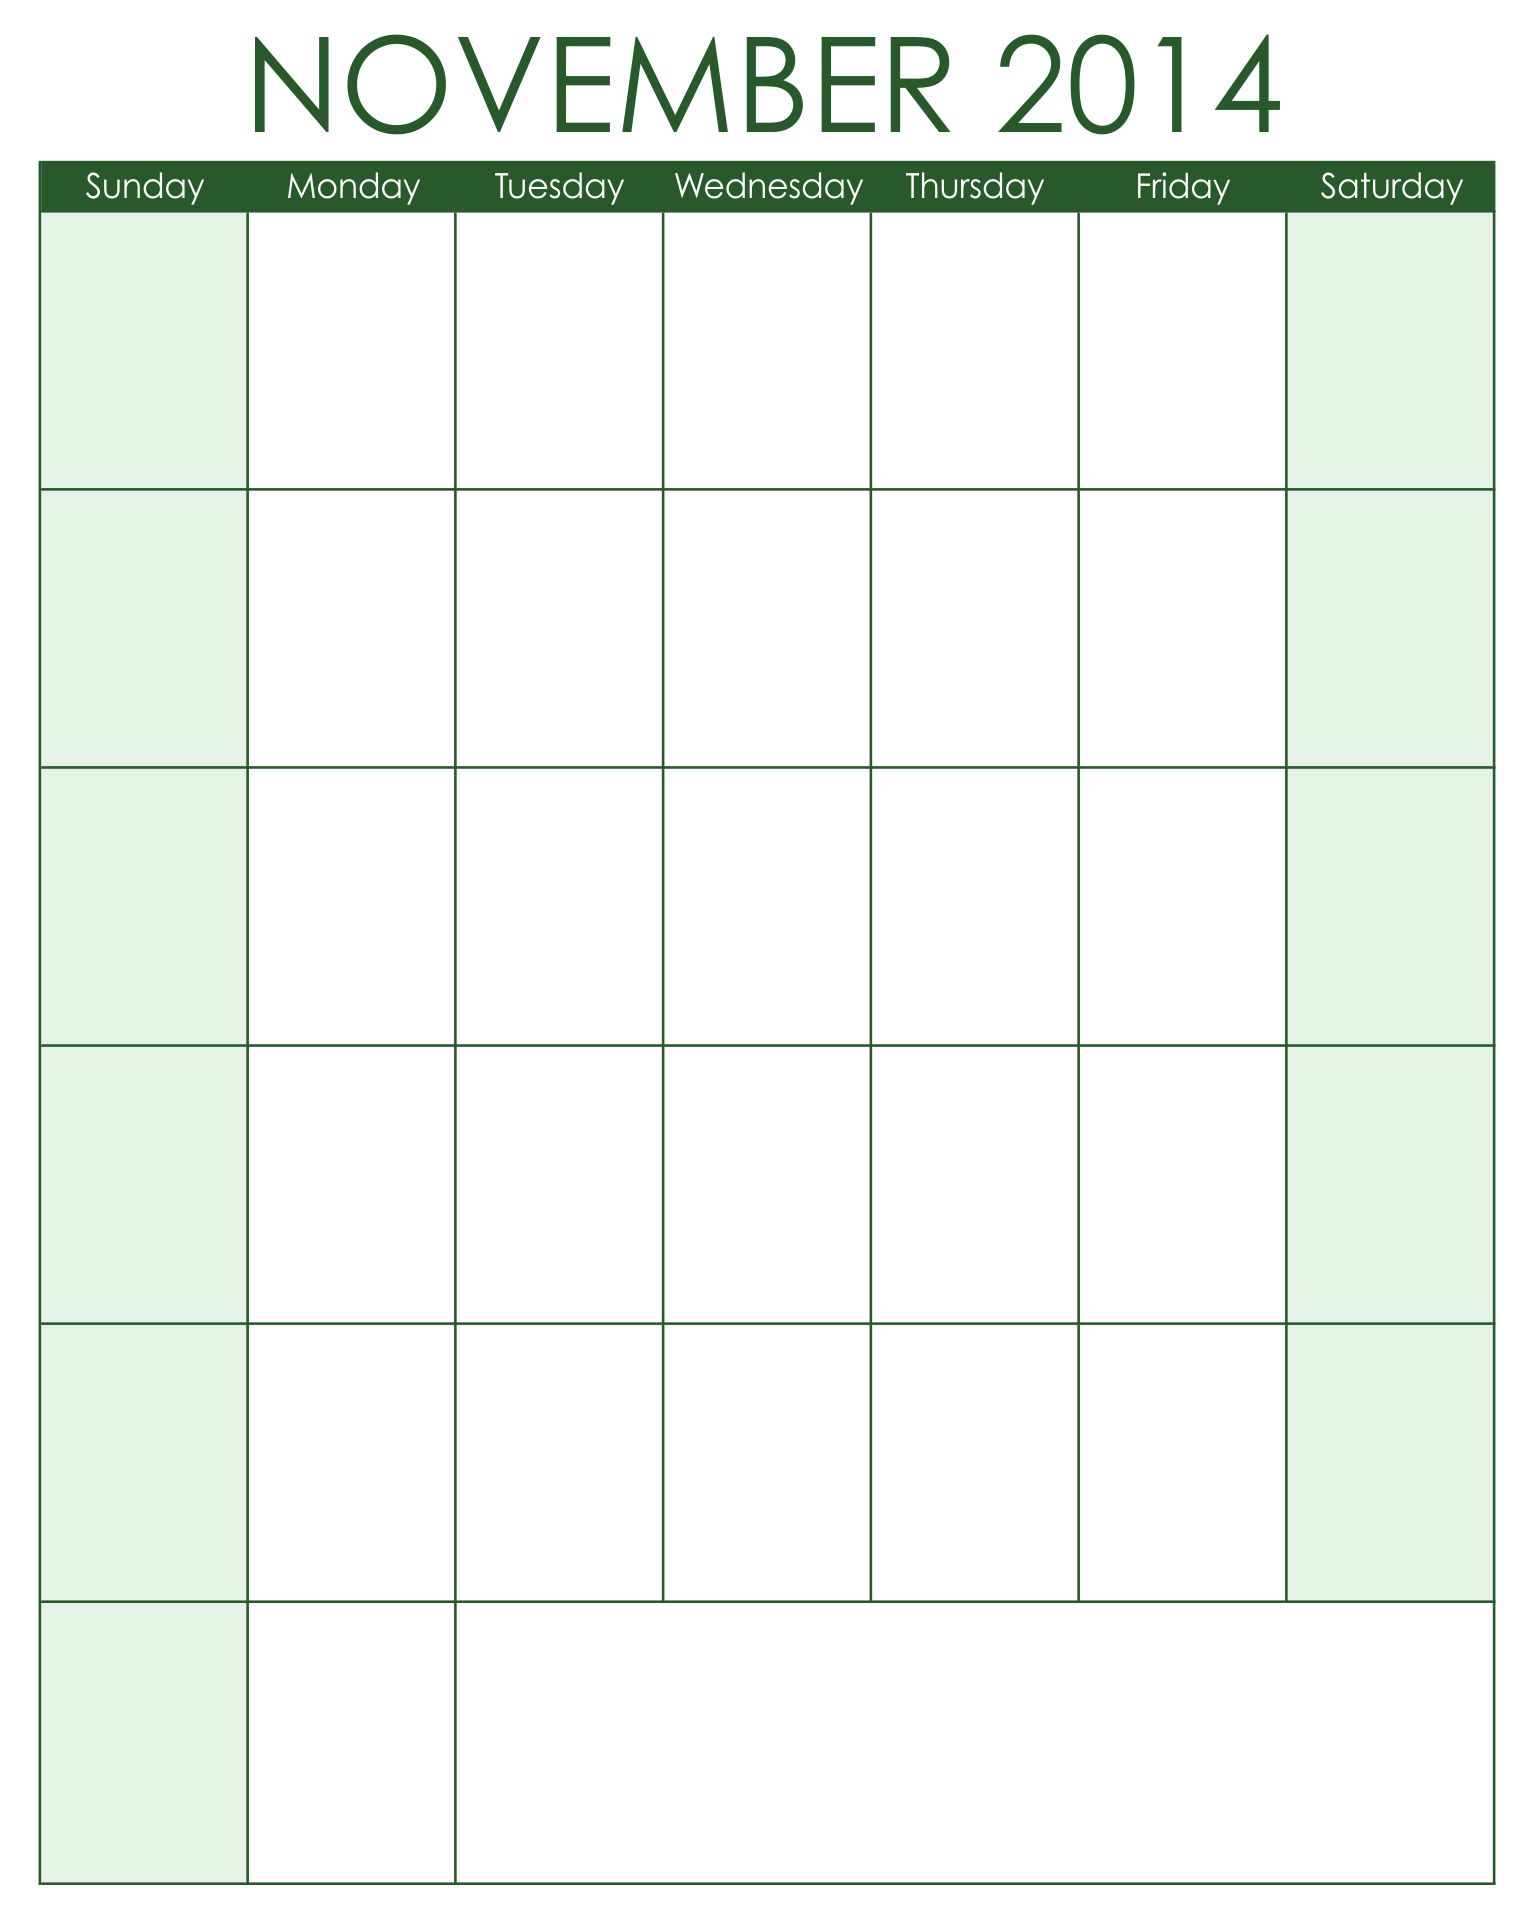 November 2014 Calendar Printable